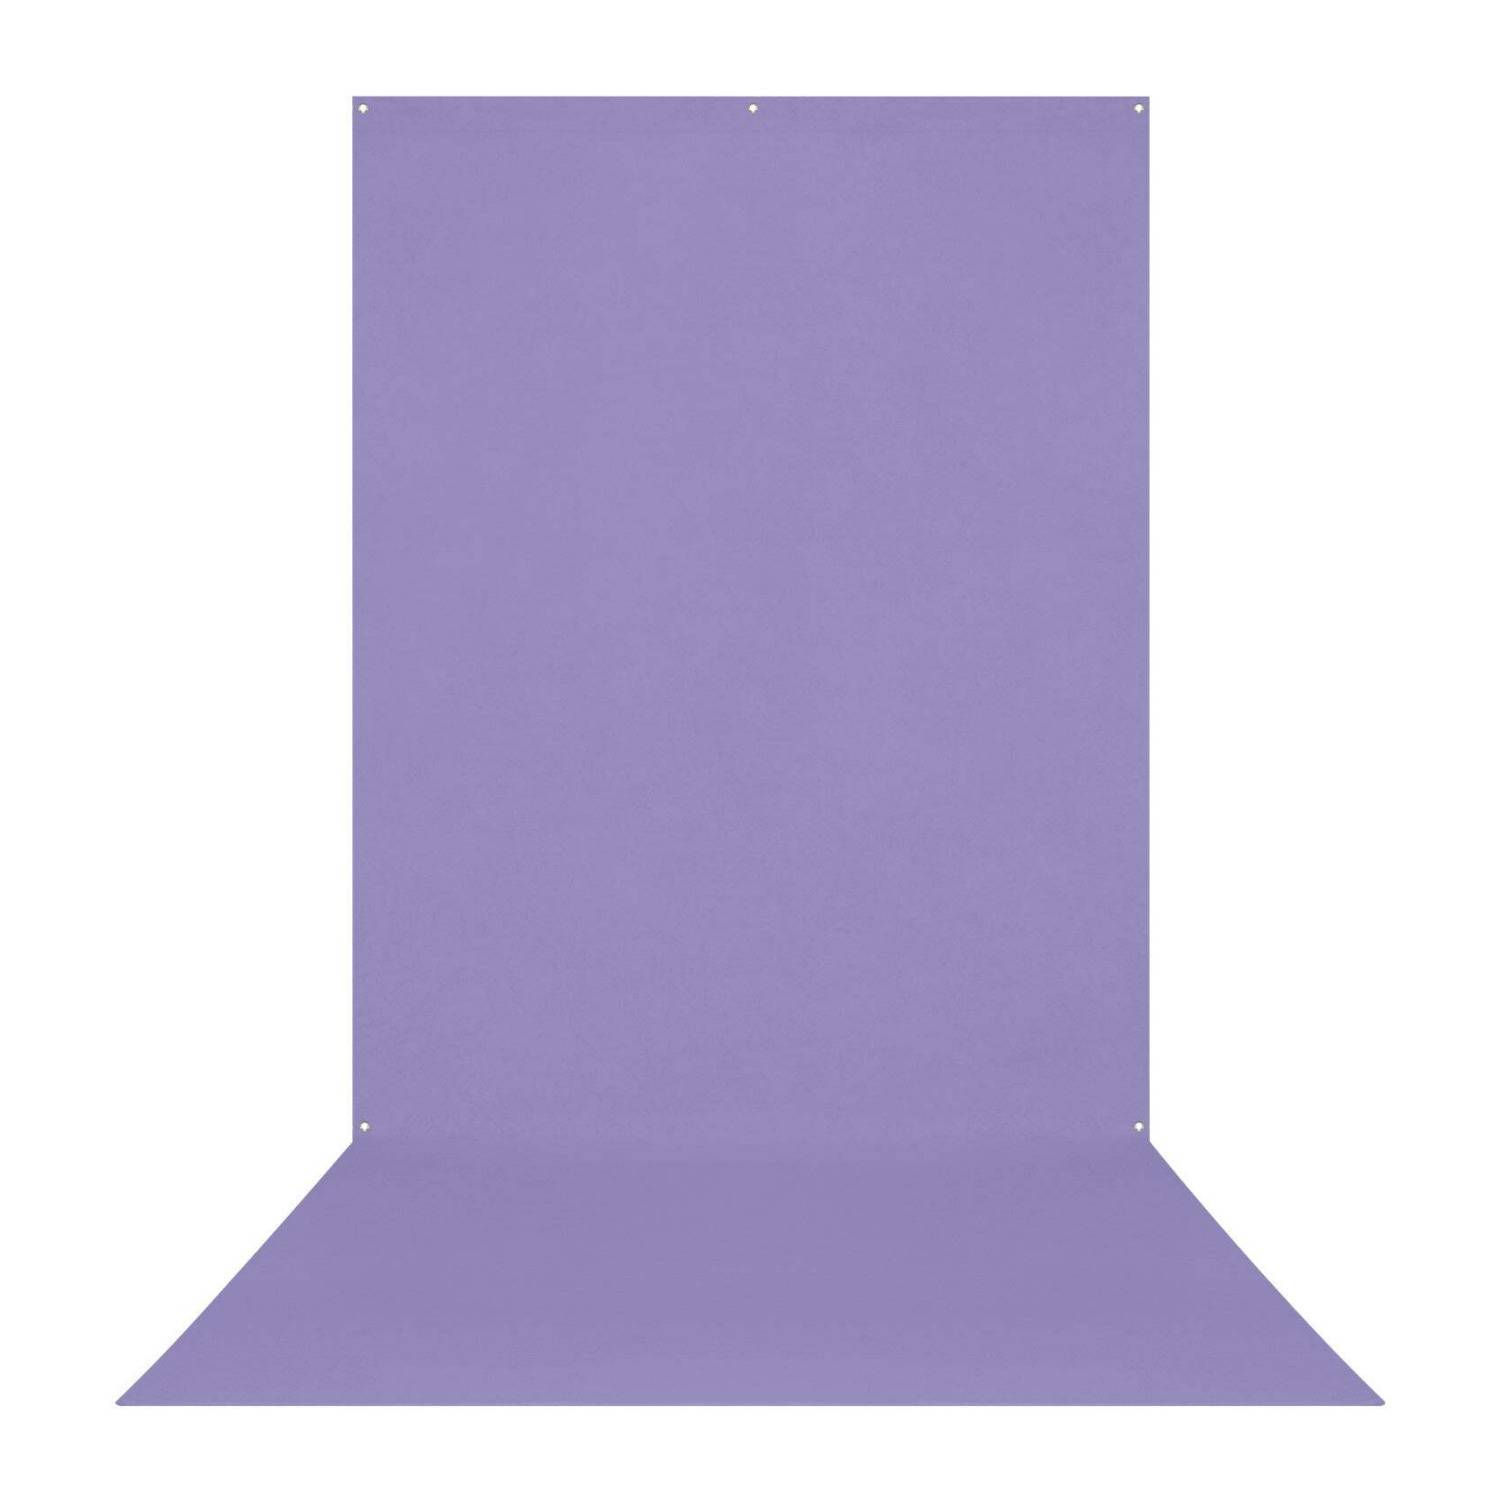 Westcott X-Drop Wrinkle-Resistant Backdrop For Video Conferencing (Periwinkle Purple, 5 x 12 Feet)